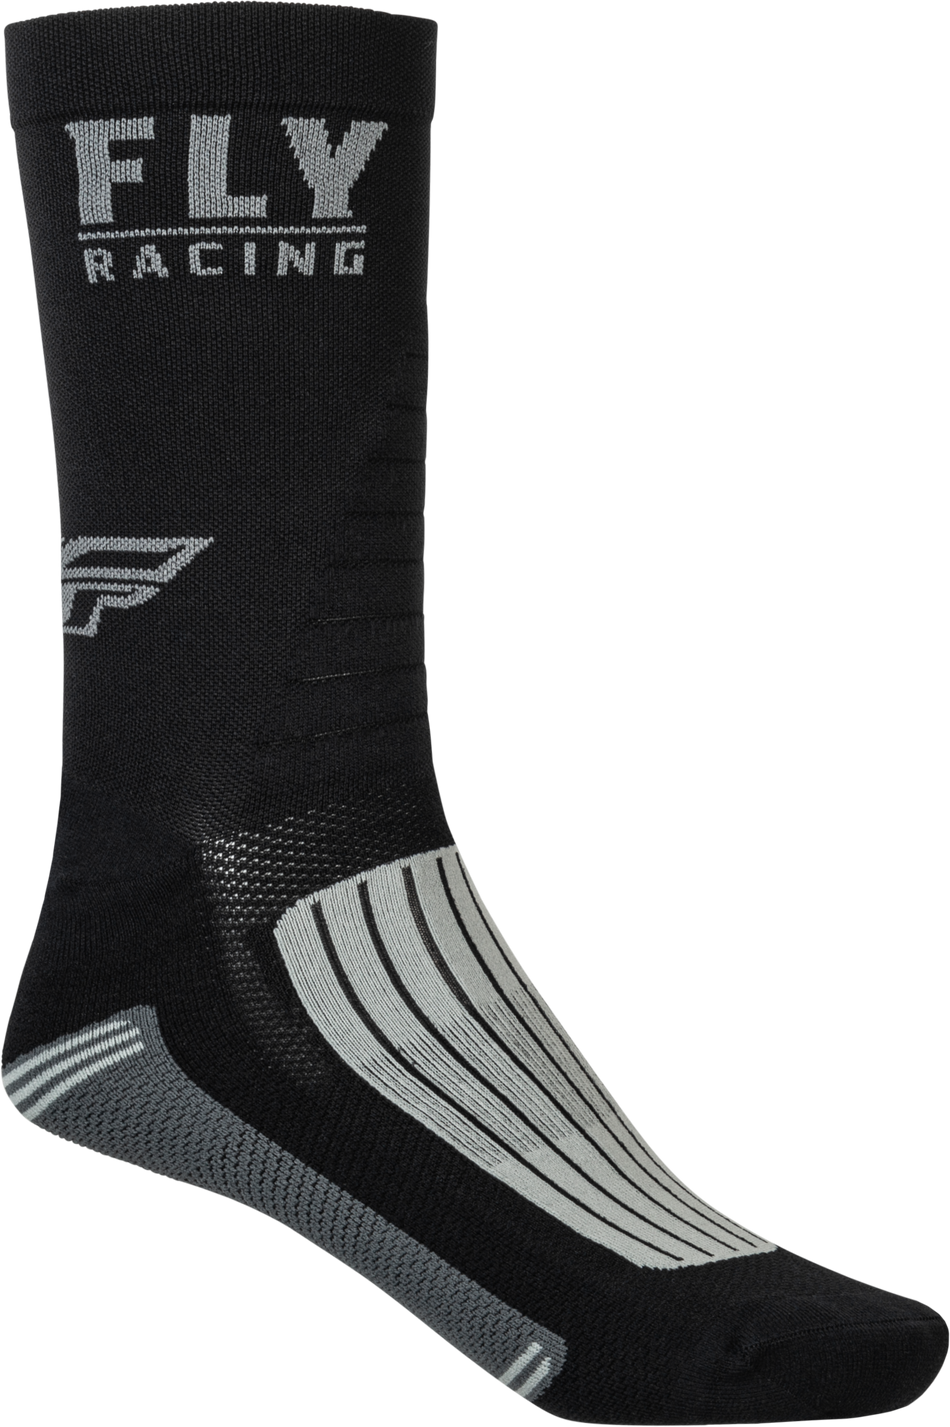 FLY RACING Factory Rider Socks Black/Grey Sm/Md 350-0561S